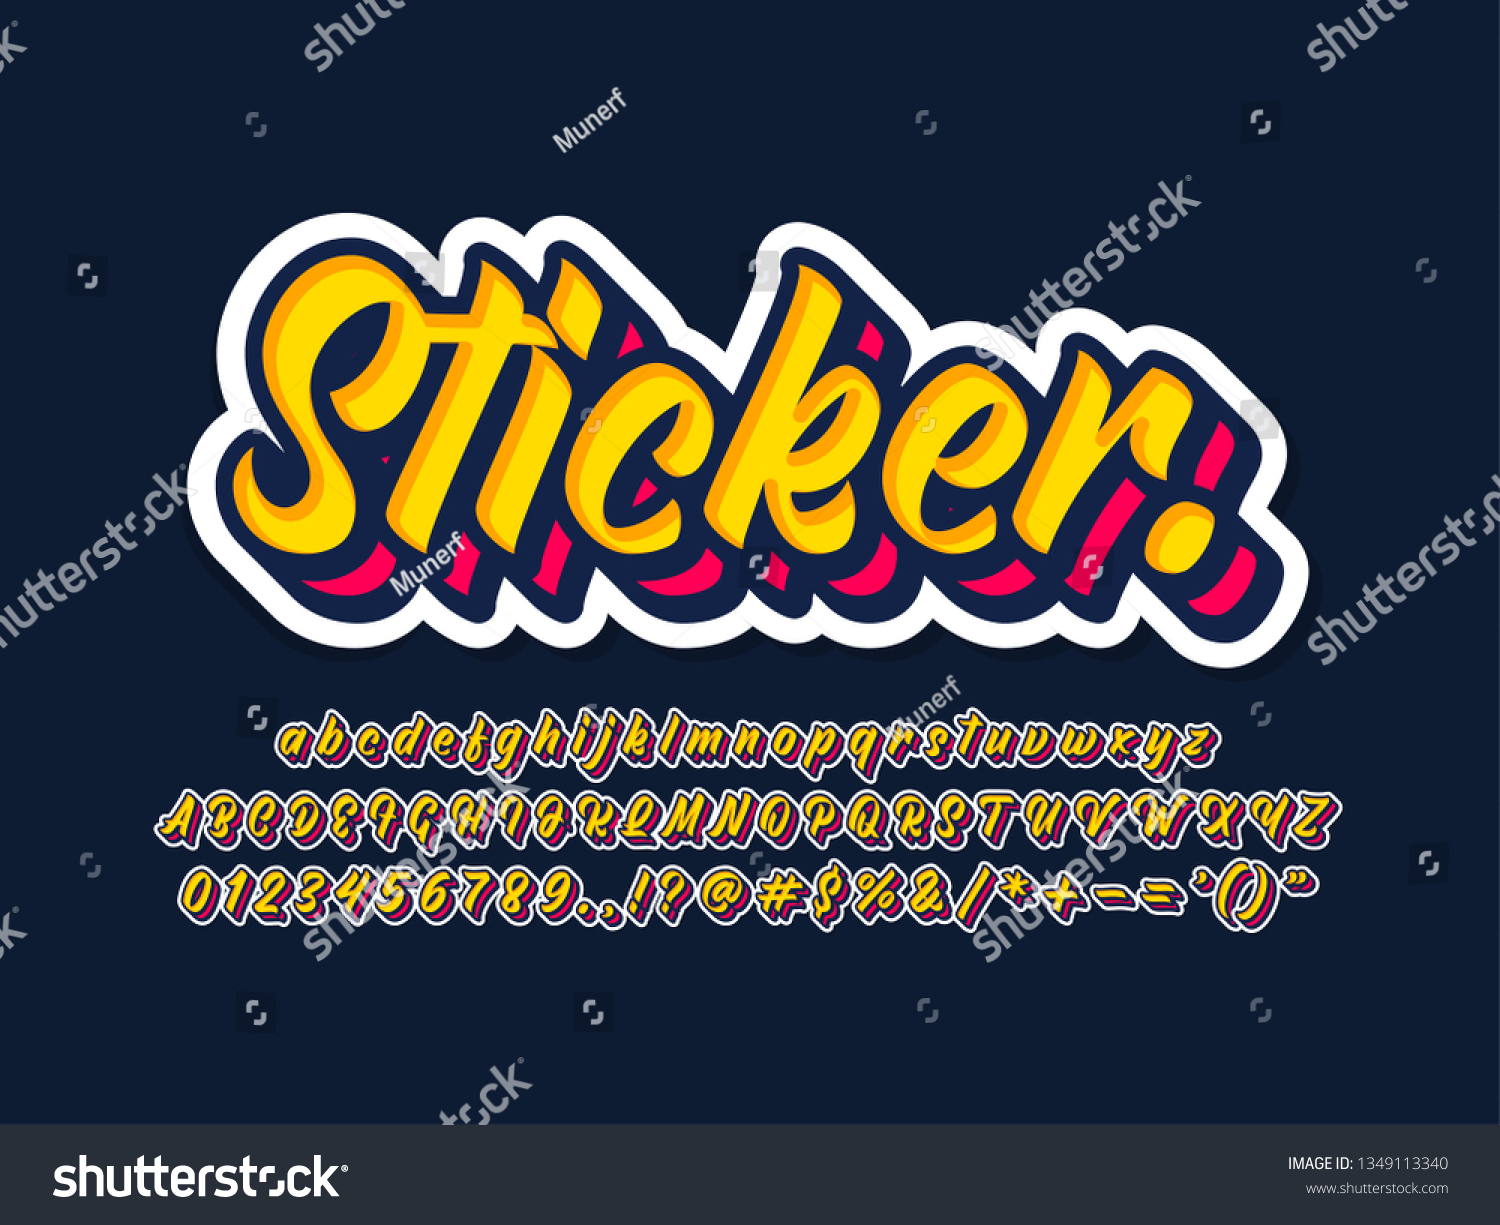 Sticker font Images, Stock Photos & Vectors | Shutterstock